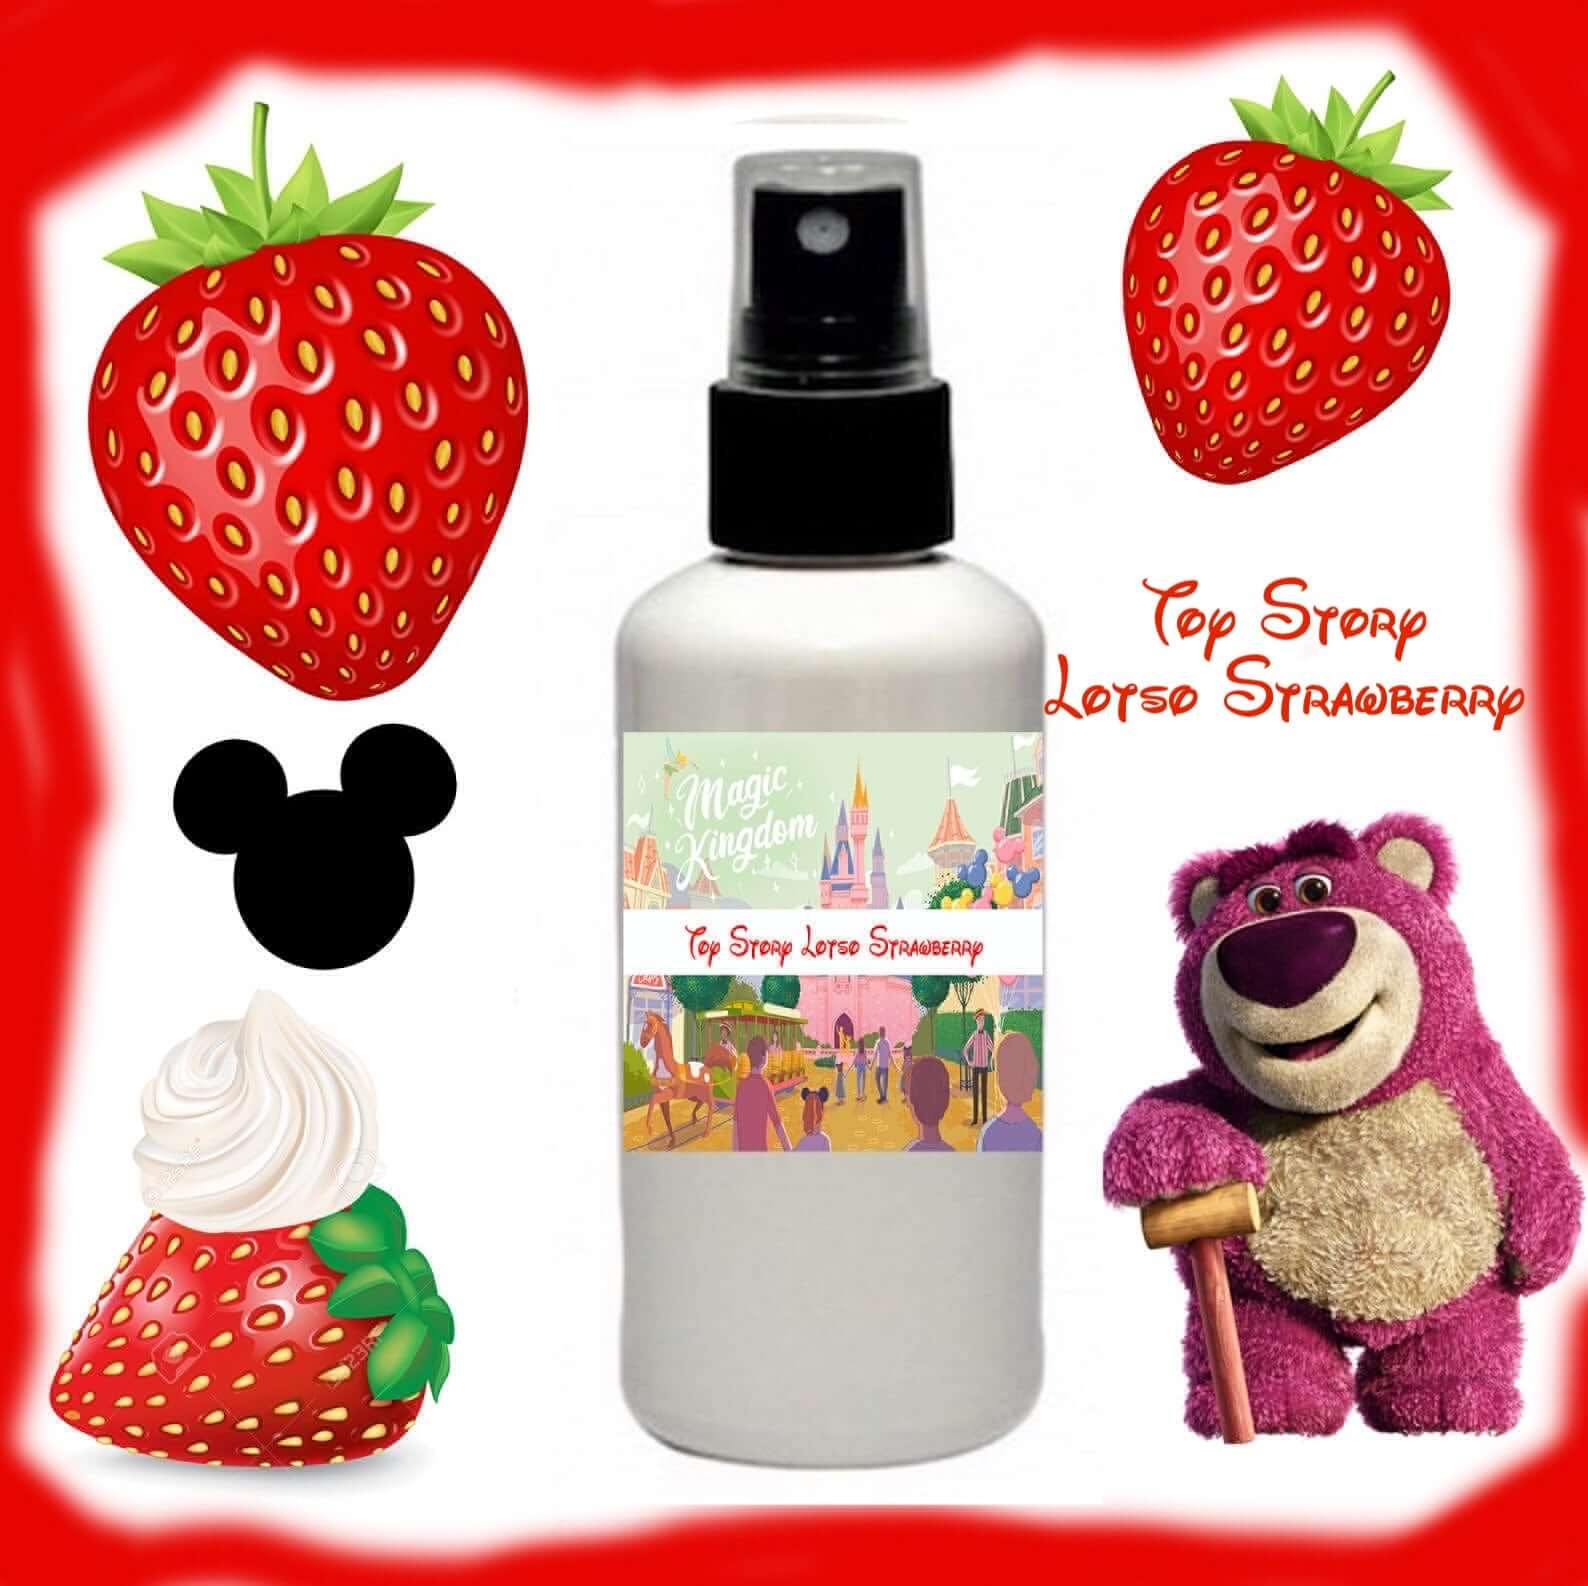 Main Street Cotton Candy Fragrance 2oz & 4oz Spray Bottle